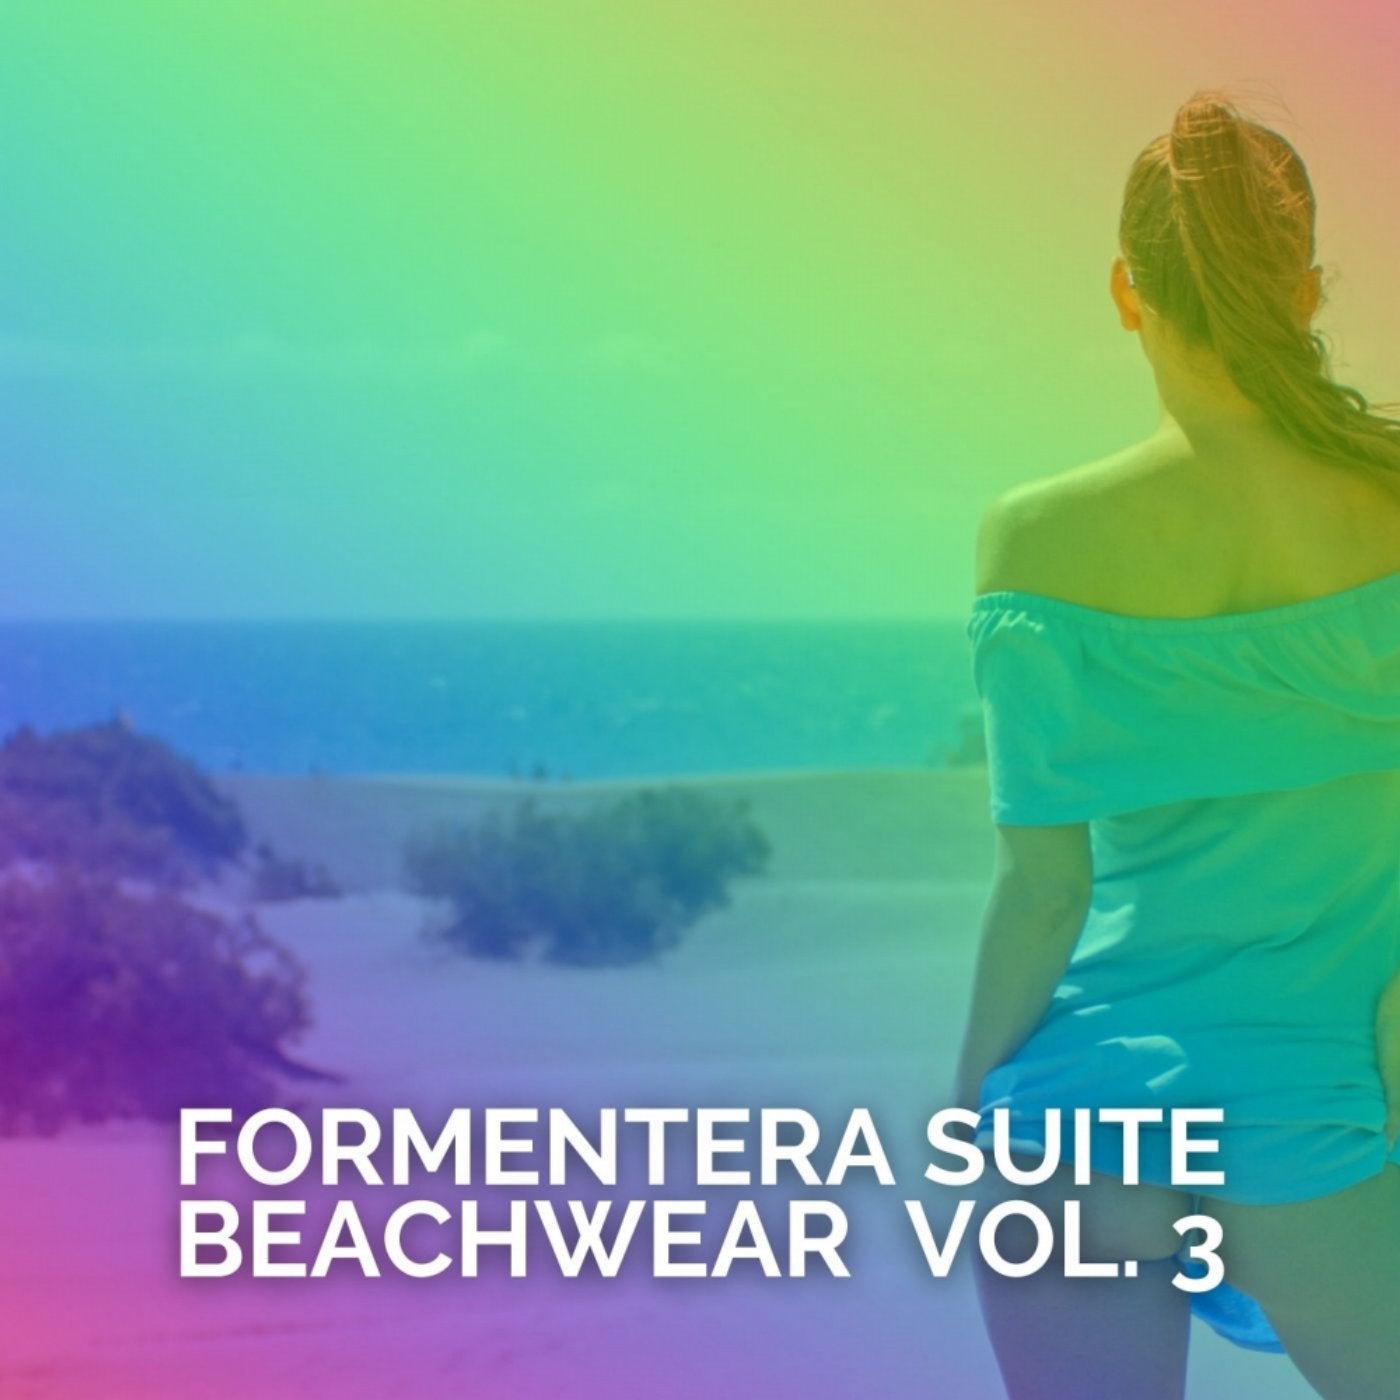 Formentera Suite Beachwear Vol. 3